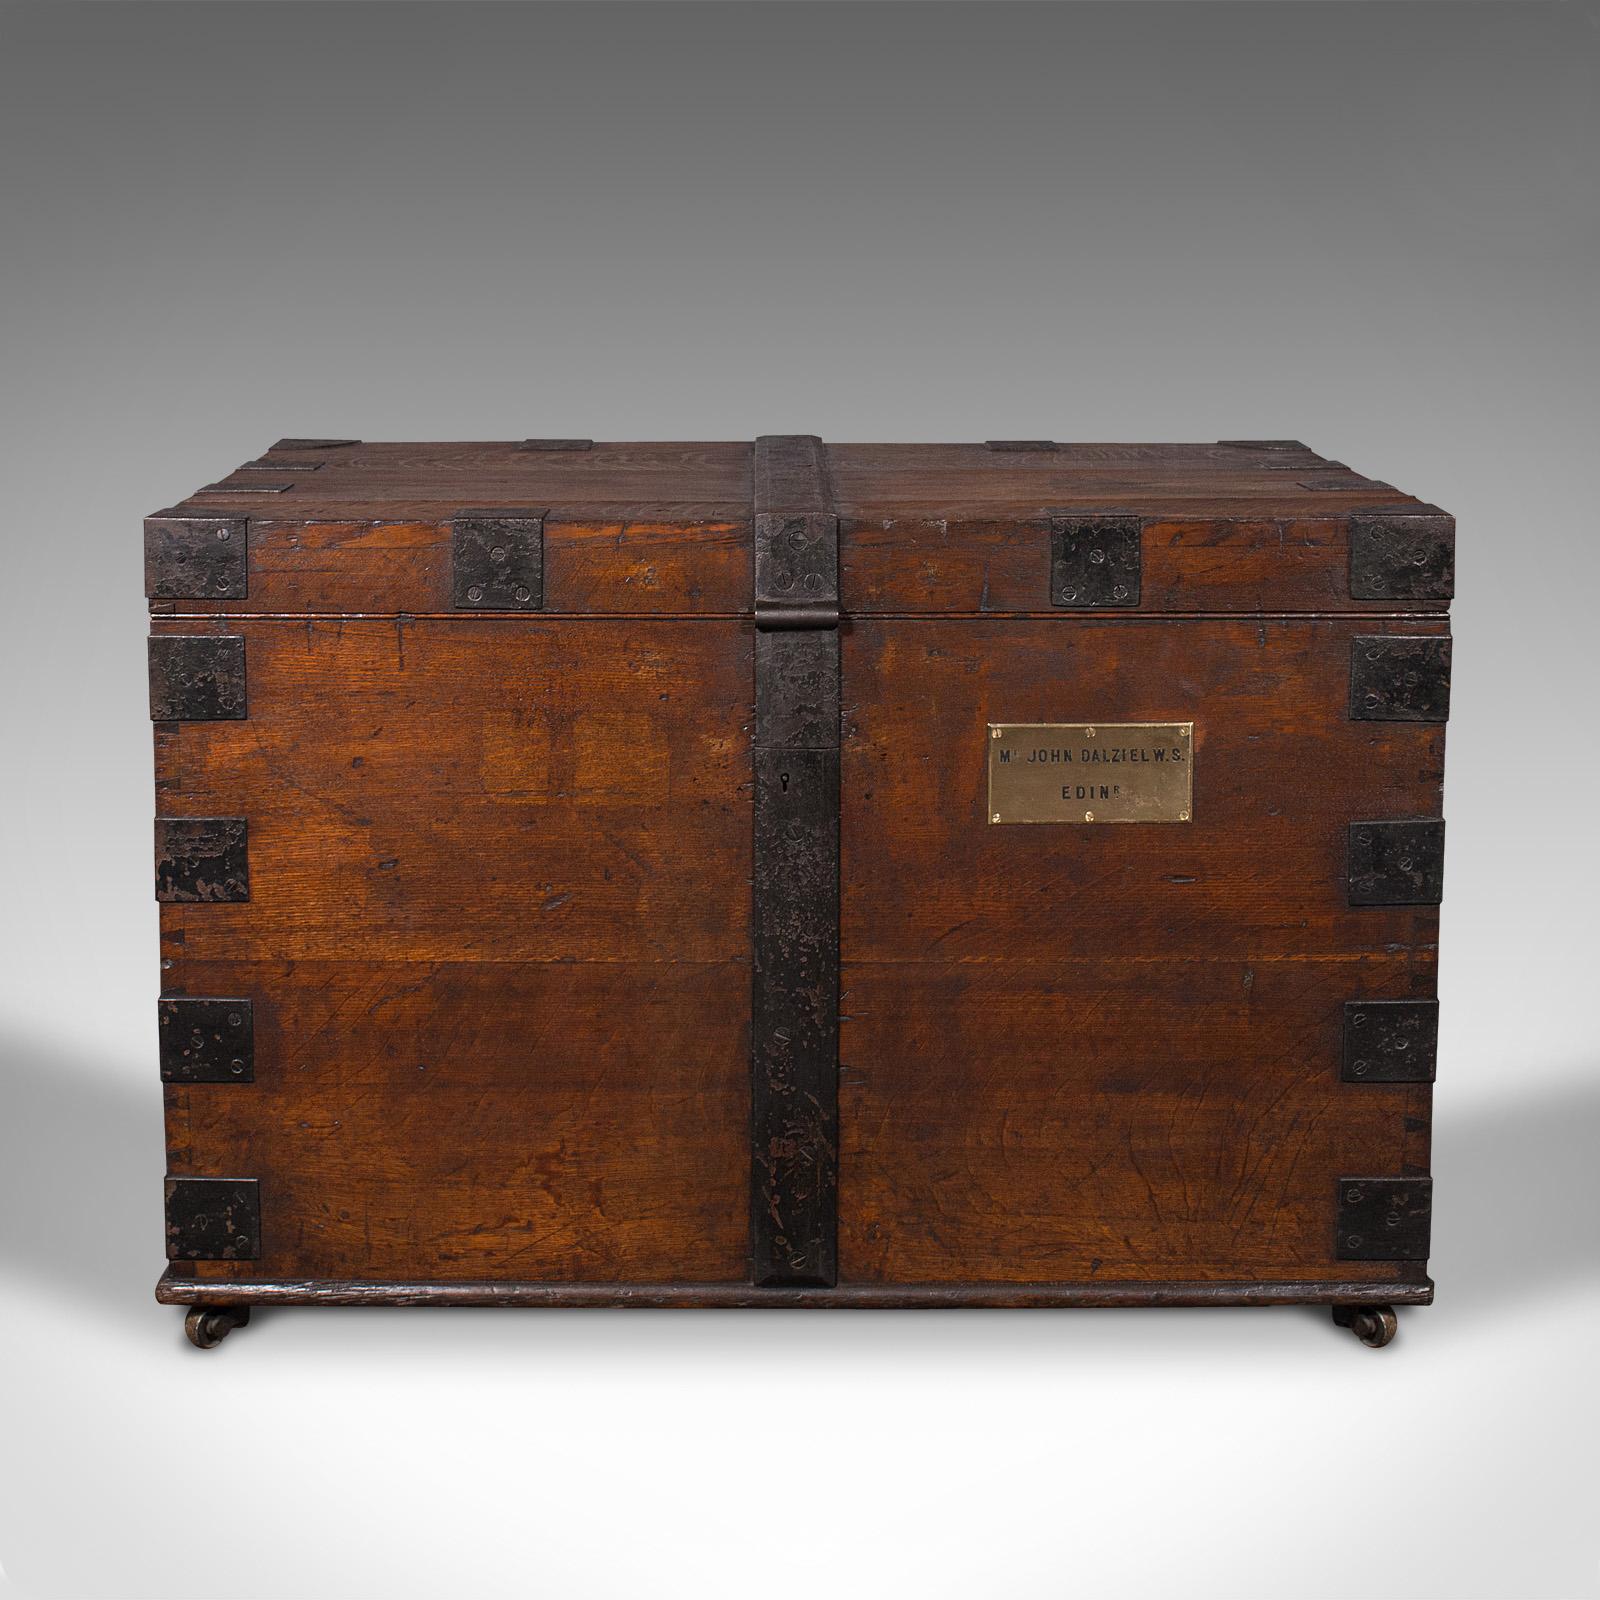 heavy ornate chest